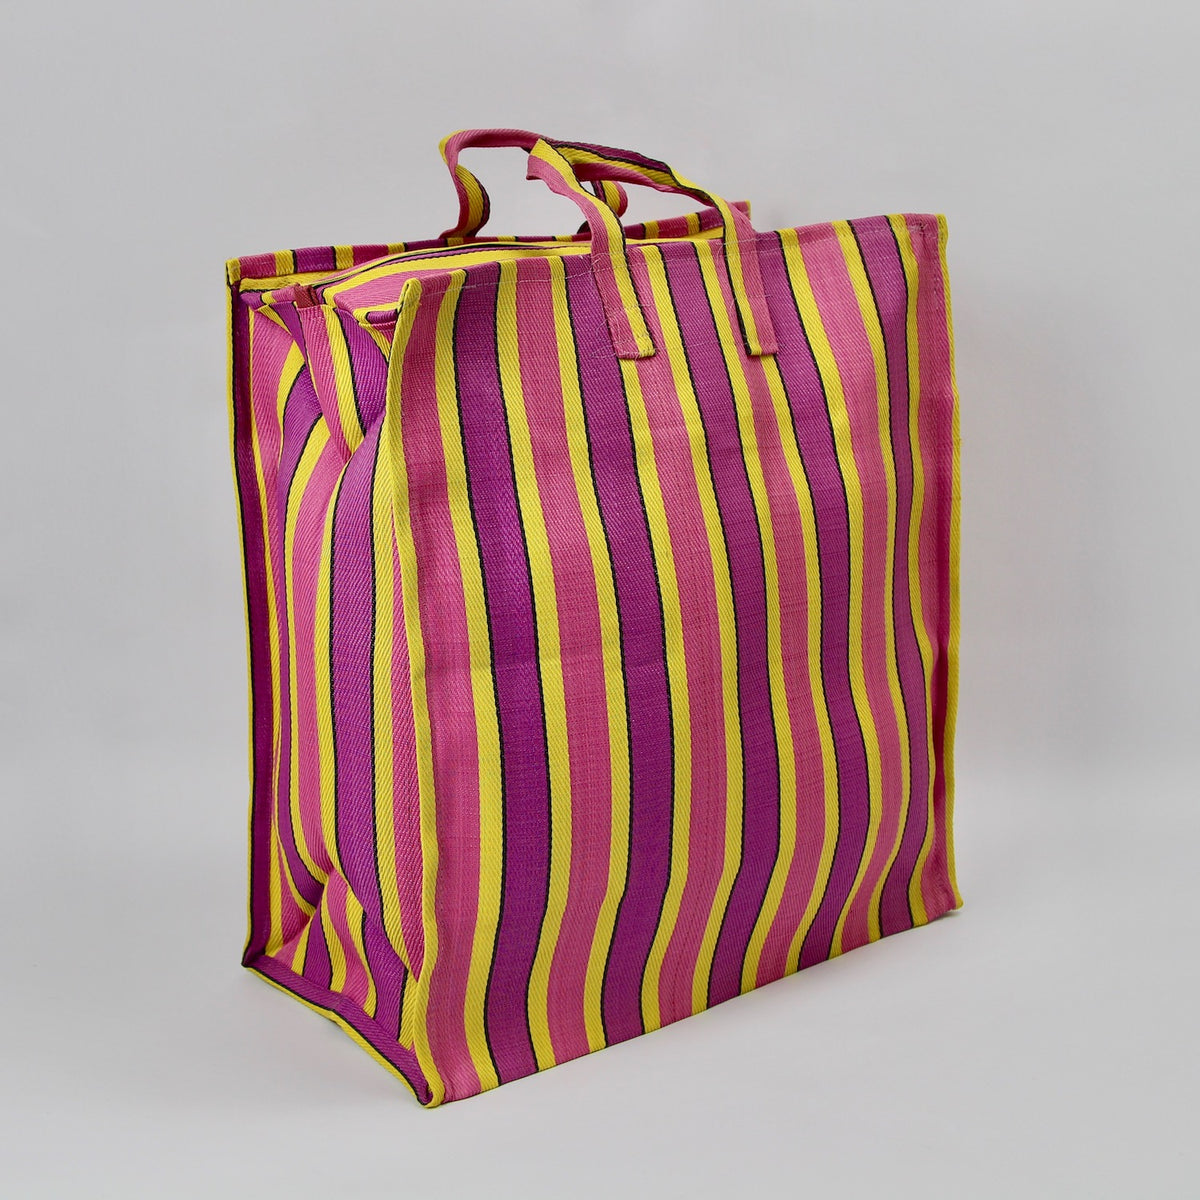 Size 5 Striped Market Bag - Fuchsia/Purple/Gold